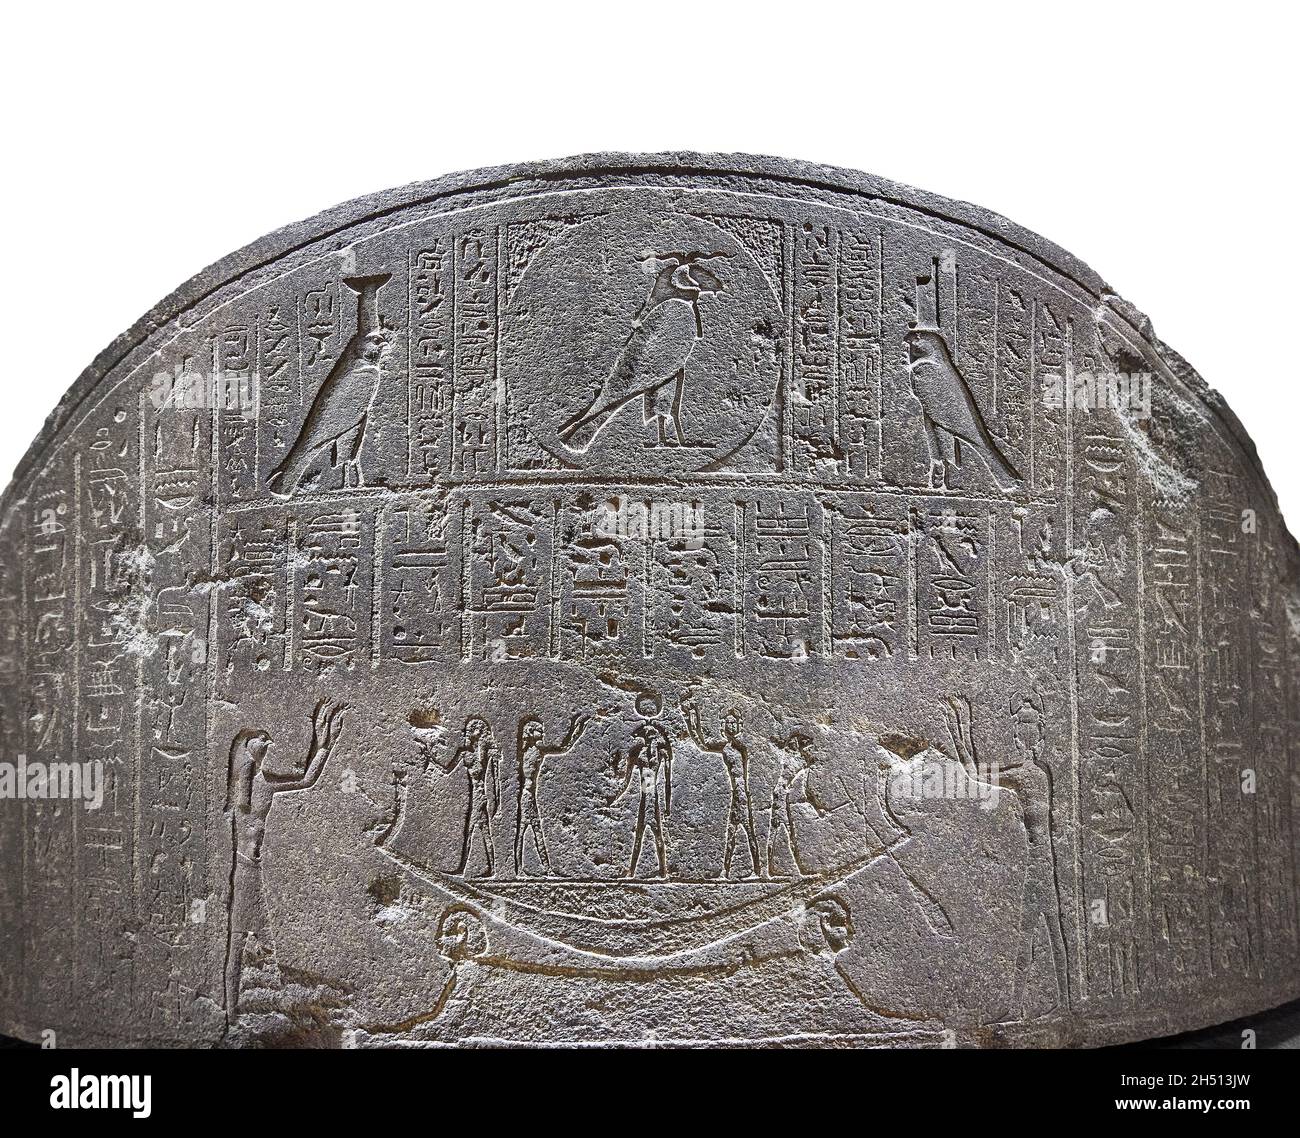 Ptolemaic Egyptian sarcophagus of Djedhor, 380-30 BC, Saqqara Memphis, diorite, Louvre Museum D8 or N344. Inscription names Djedhor (father of the god Stock Photo